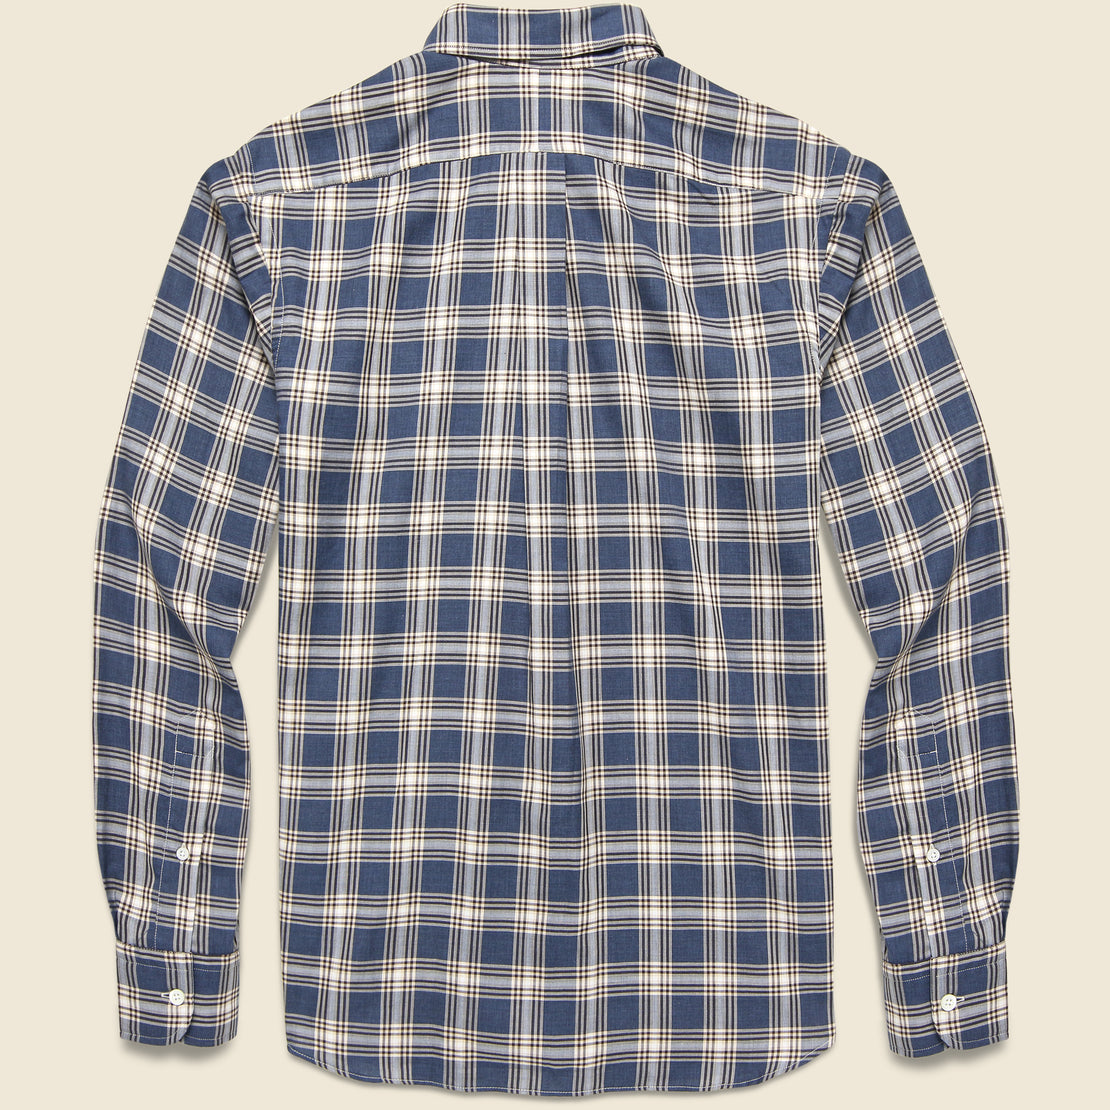 Check Twill Flannel Shirt - Denim Blue/Brown/Cream - Hamilton Shirt Co. - STAG Provisions - Tops - L/S Woven - Plaid